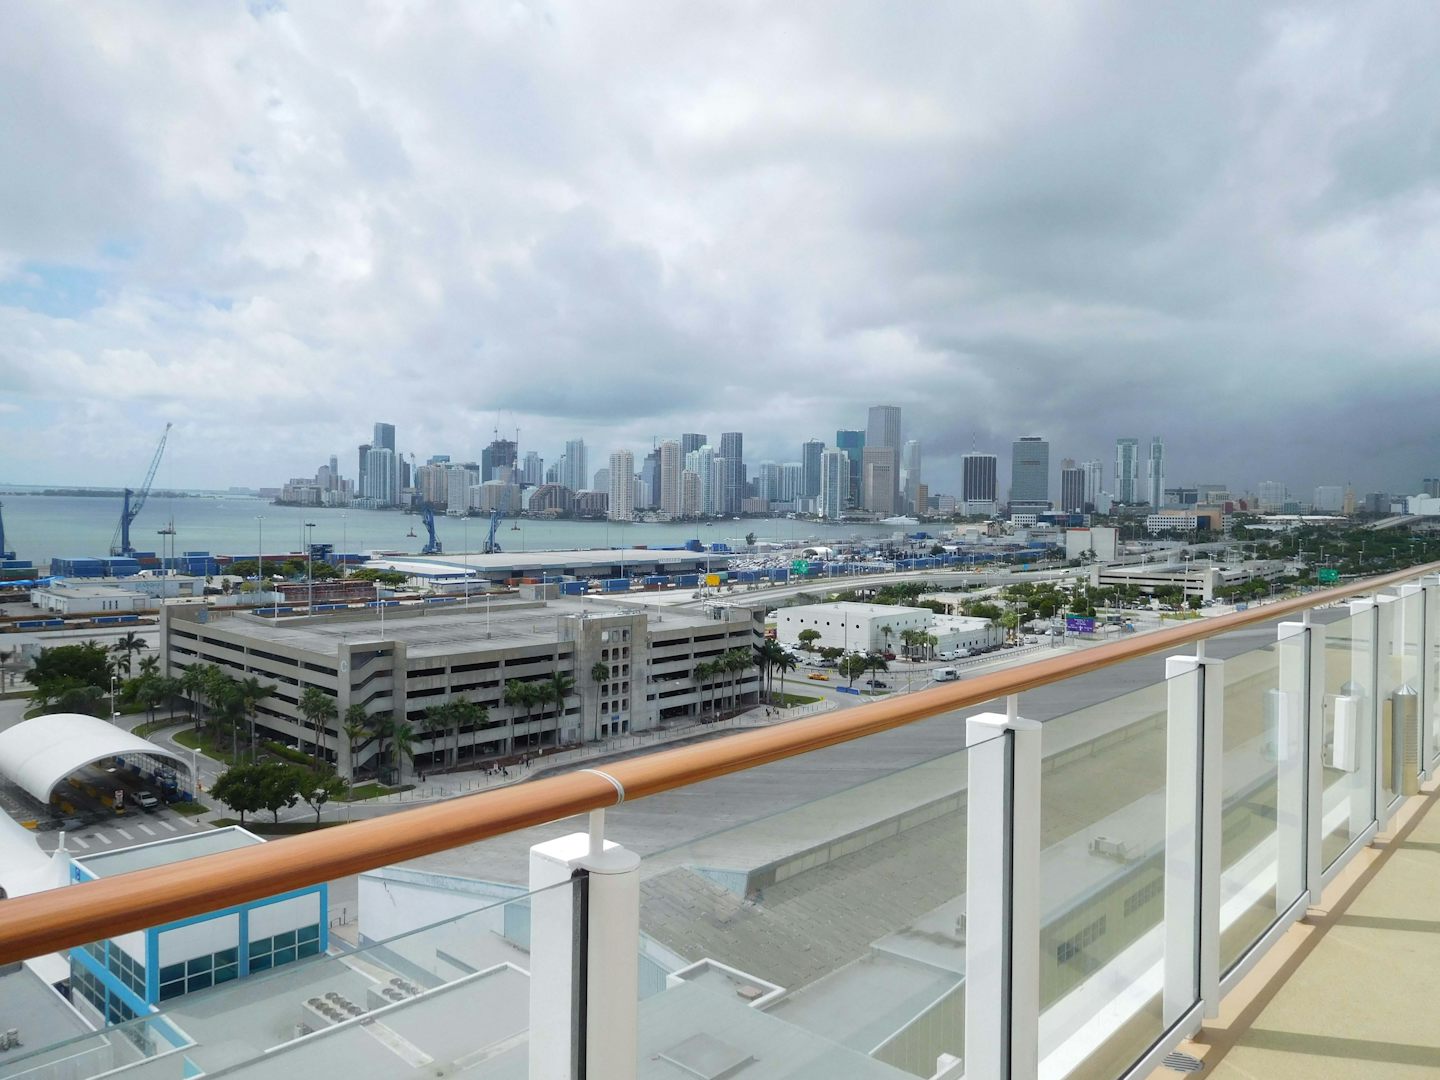 View of Miami Beach area